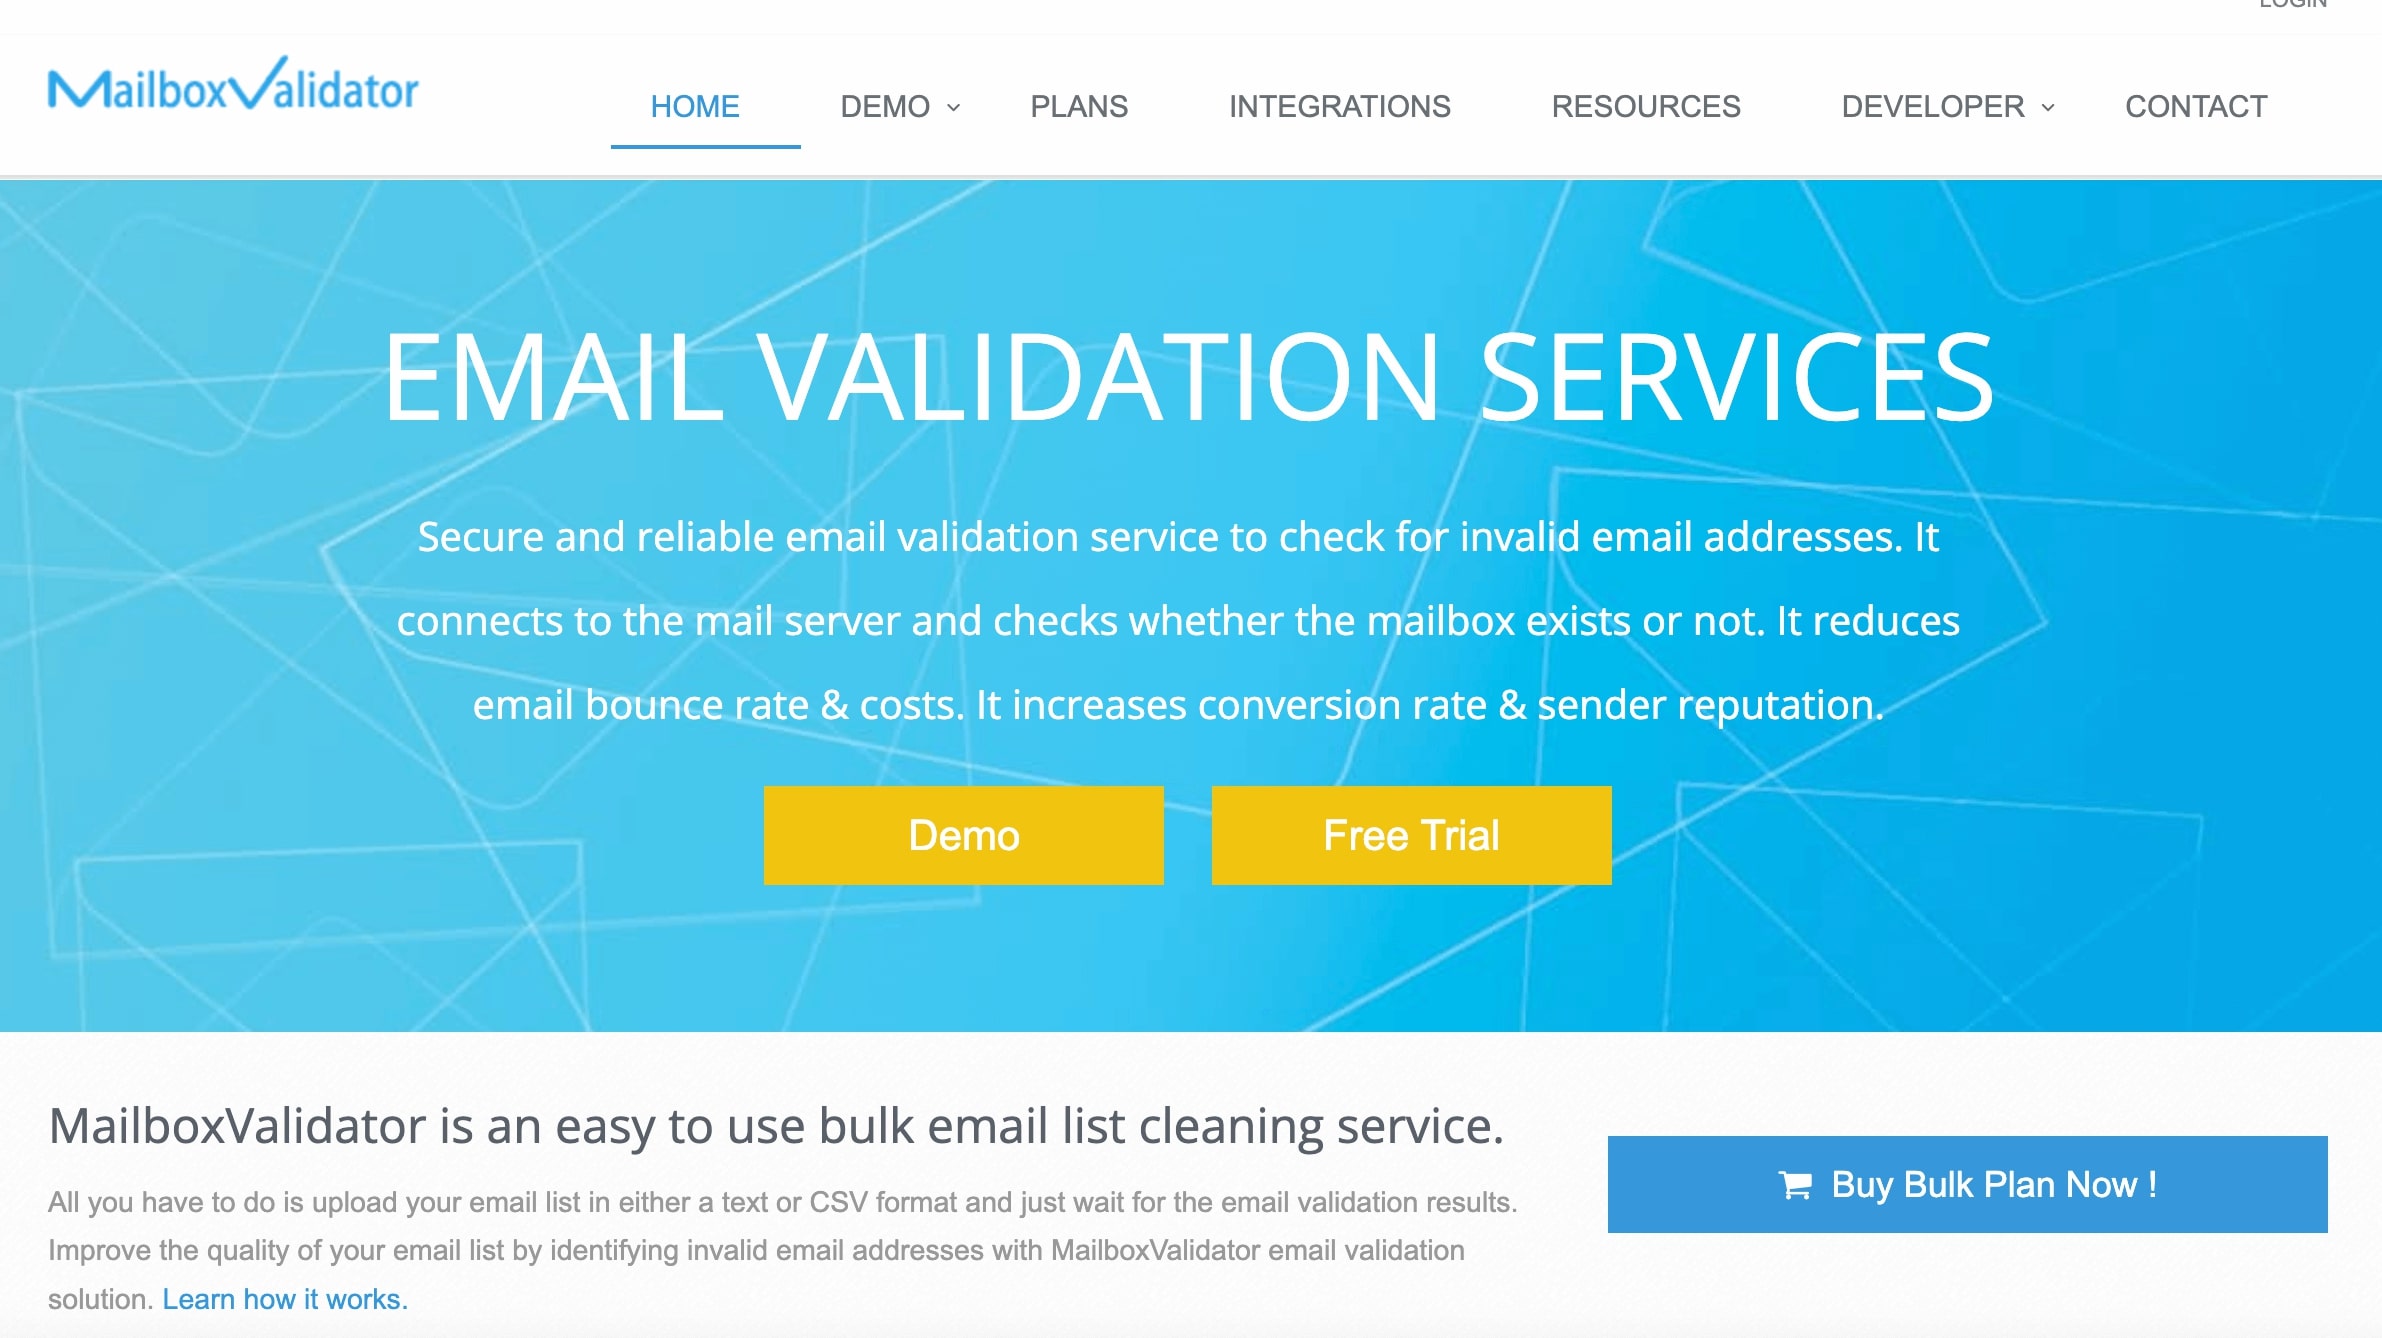 Mailbox validator